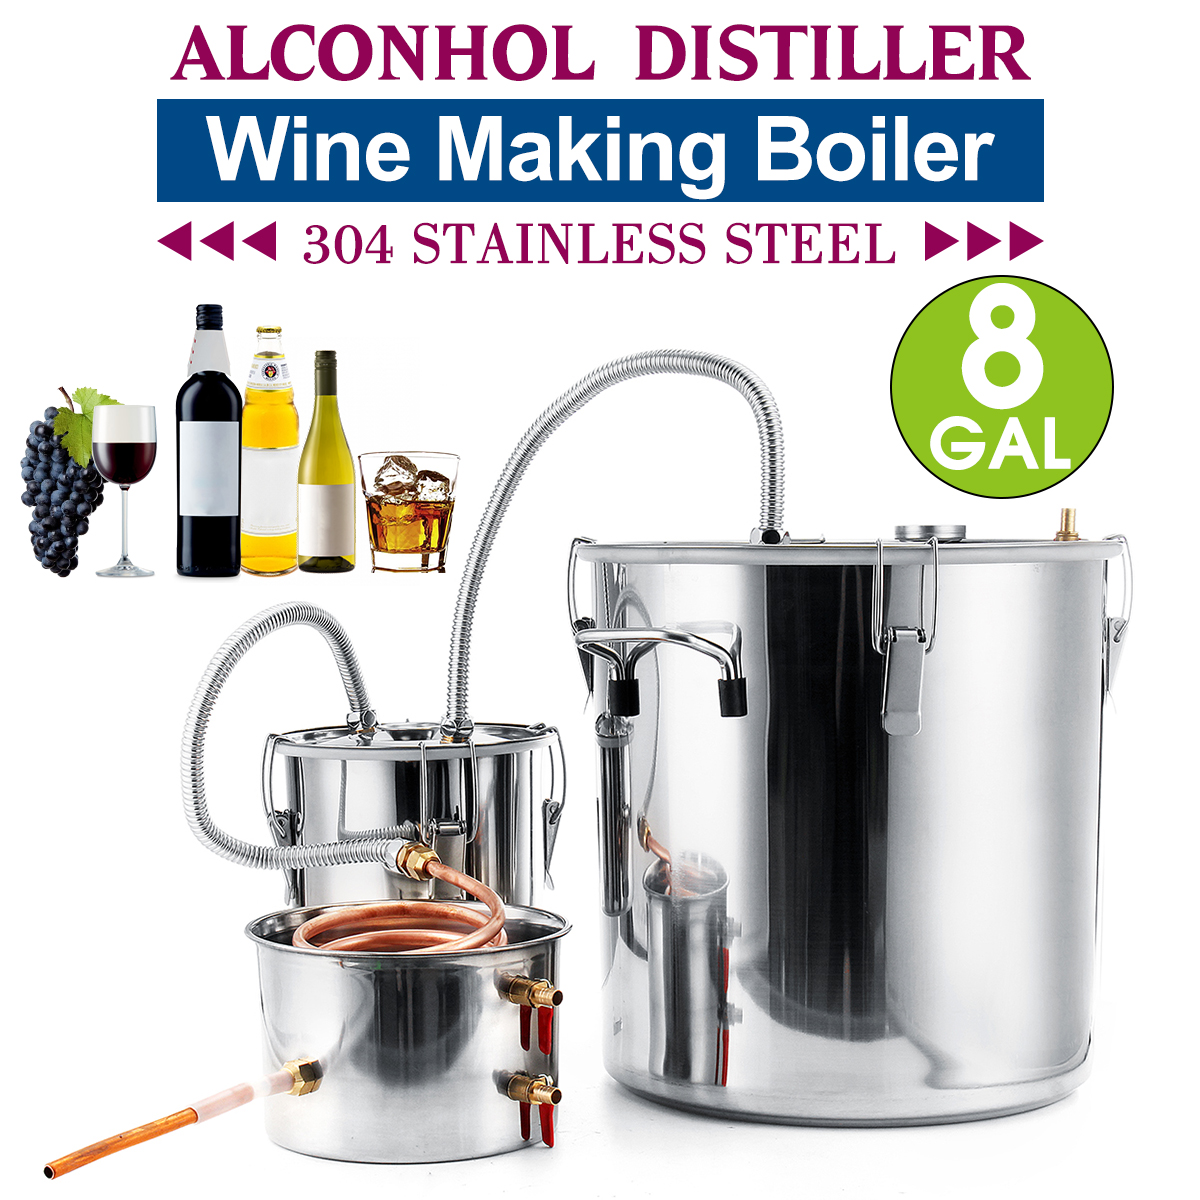 2358-Gallons--Moonshine-Still-Spirits-Kit-Water-Alcohol-Distiller-Copper-Tube-Boiler-Home-Brewing-Ki-1484258